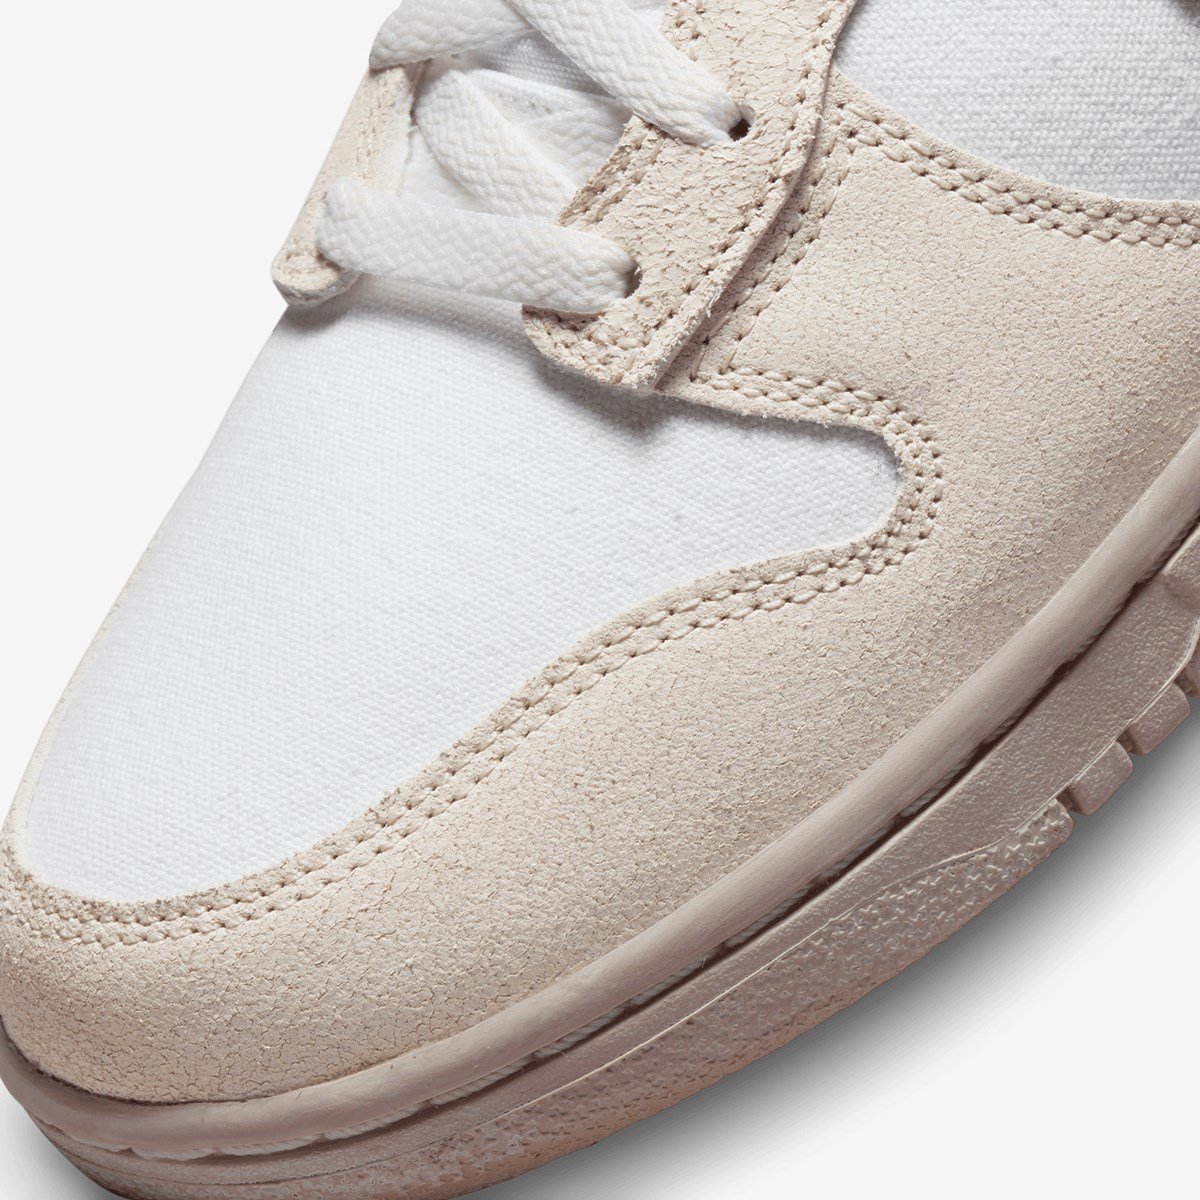 Nike Dunk High EMB Cracked Leather White Tan